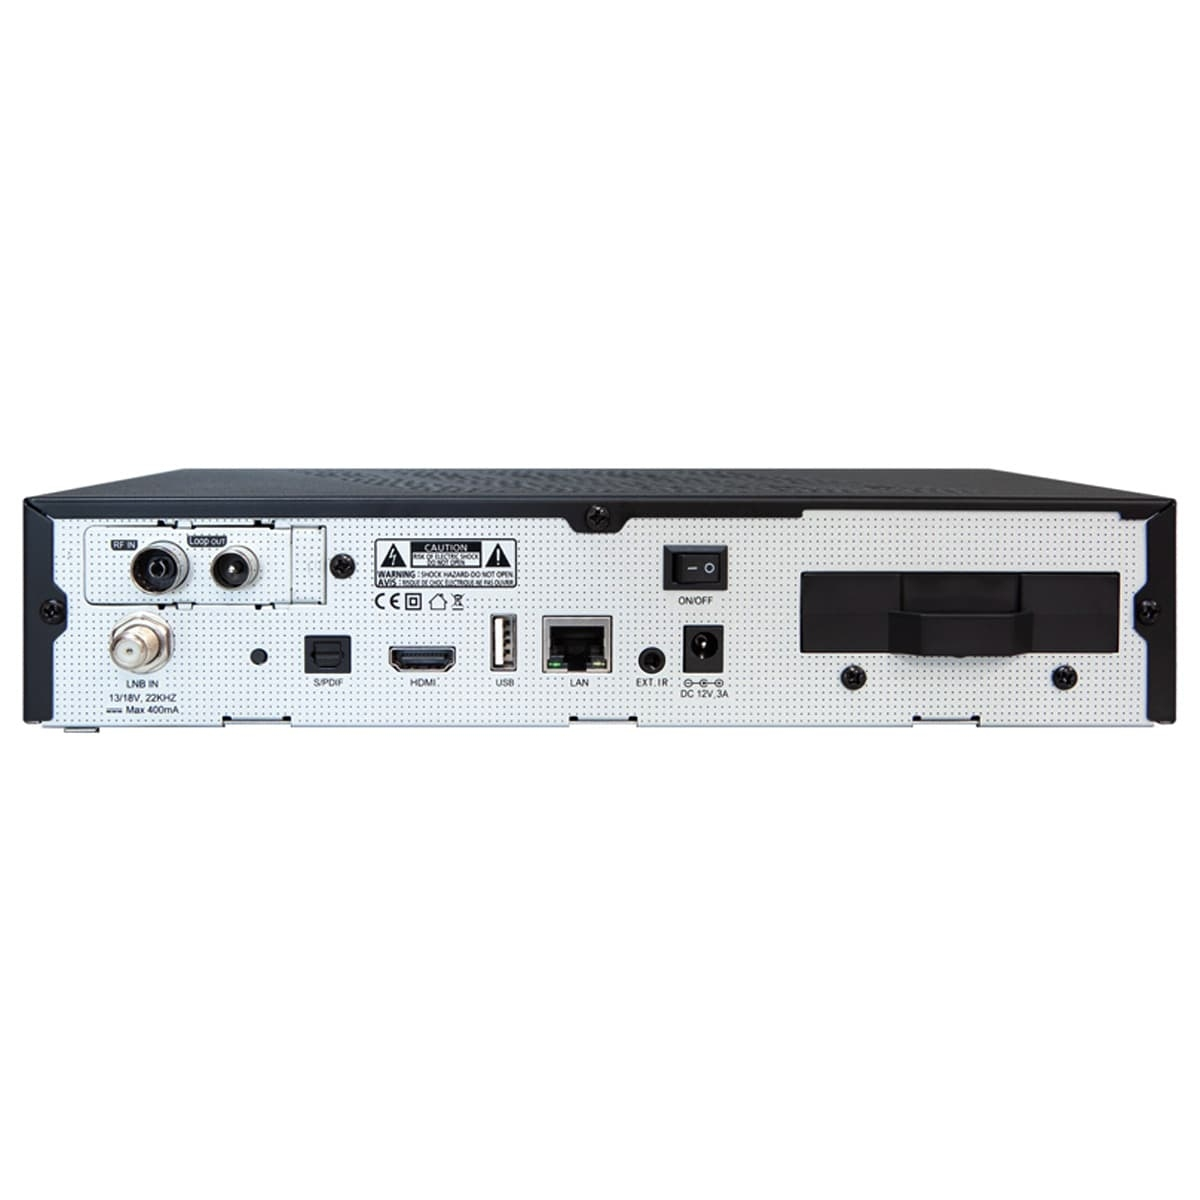 AB-COM PULSe 4K 4TB DVB-C/T2 Sat-Receiver Tuner, Schwarz) DVB-S2X Combo (PVR-Funktion, Twin